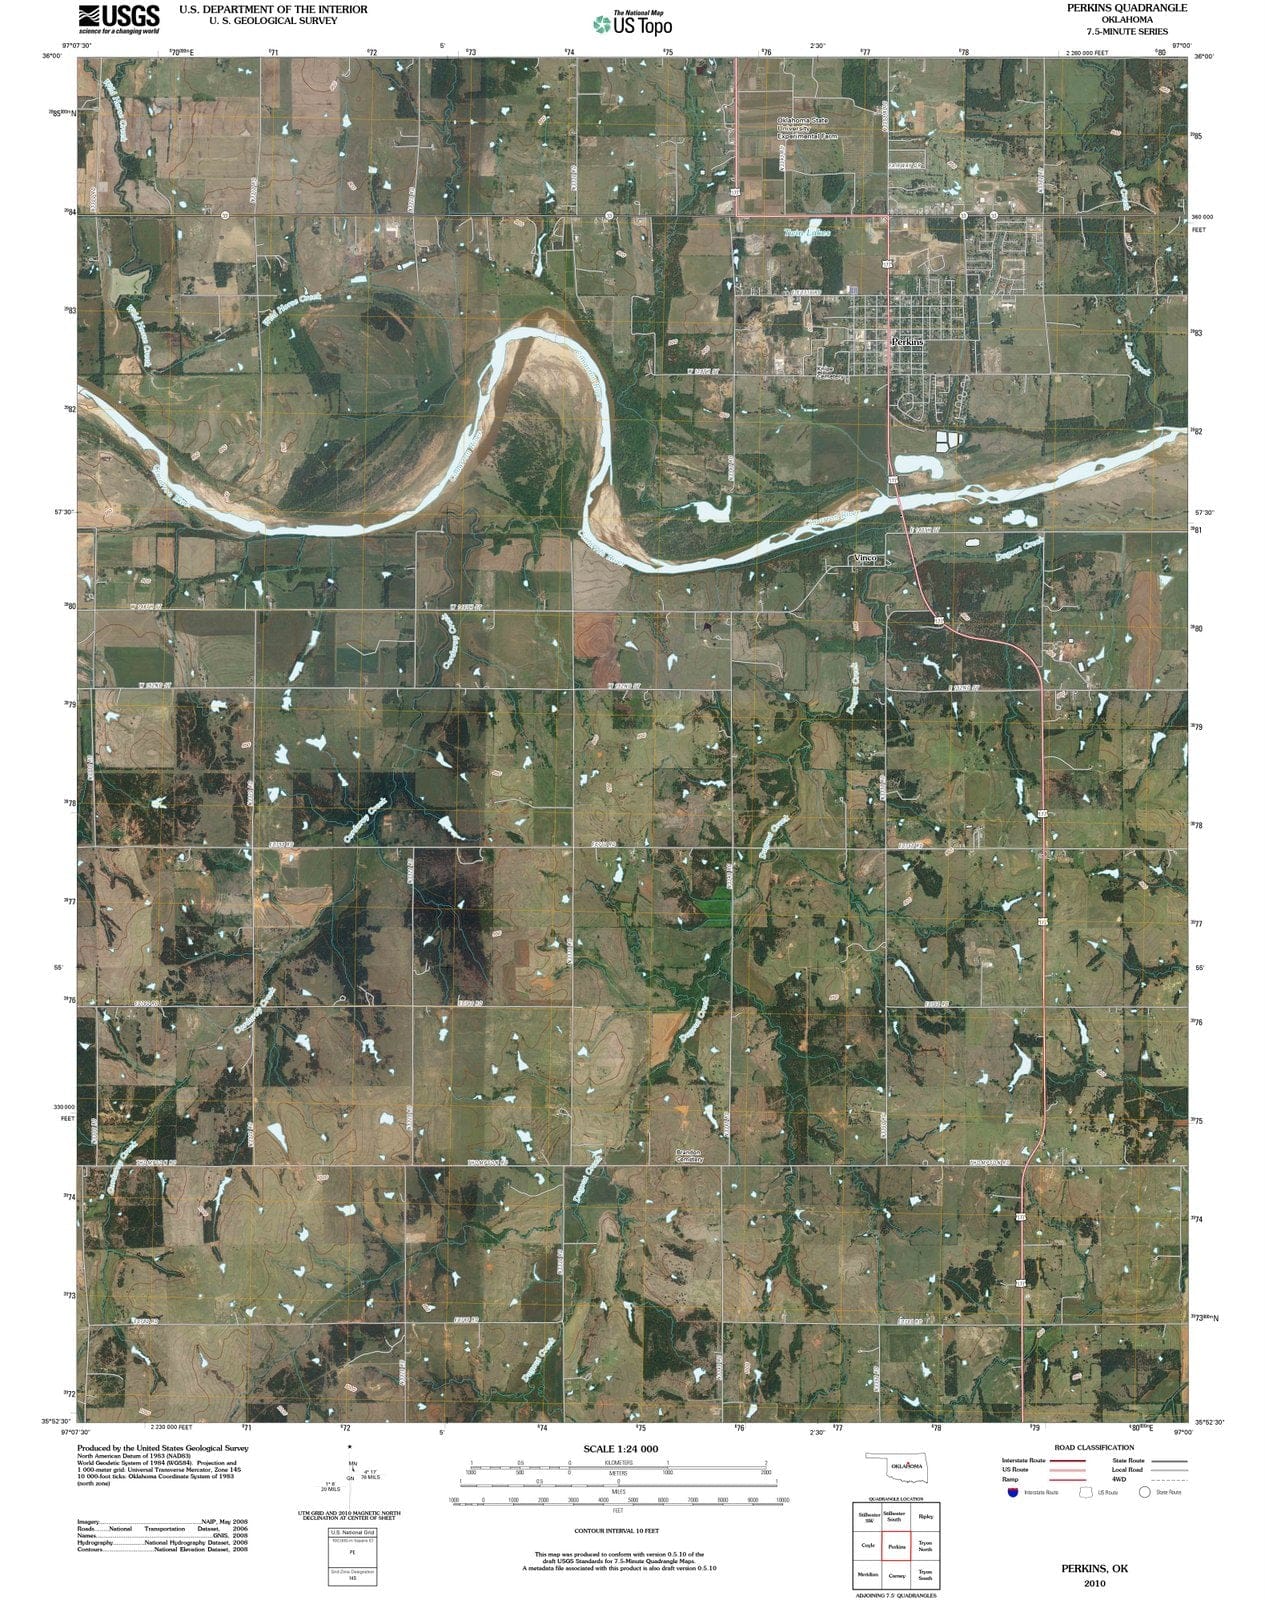 2010 Perkins, OK - Oklahoma - USGS Topographic Map